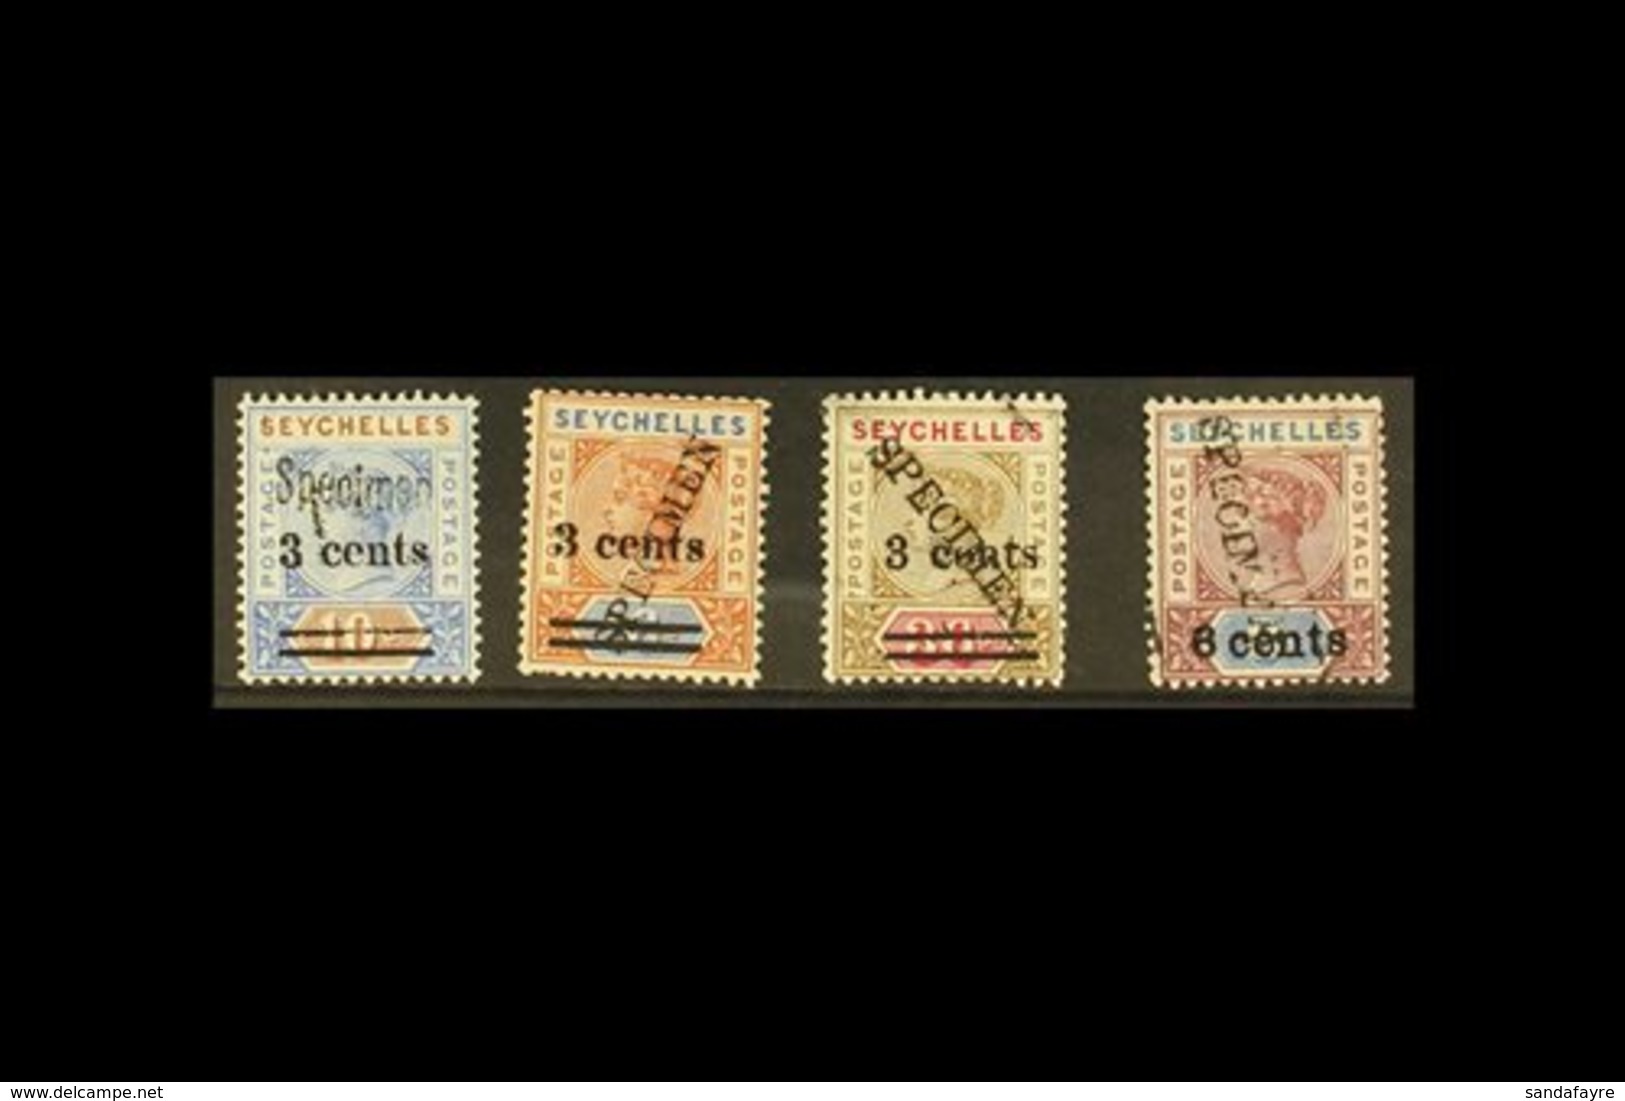 1901  Surcharges Set Handstamped "SPECIMEN", SG 37/40, Fine Mint, The 3c On 36c Without Gum. (4 Stamps) For More Images, - Seychelles (...-1976)